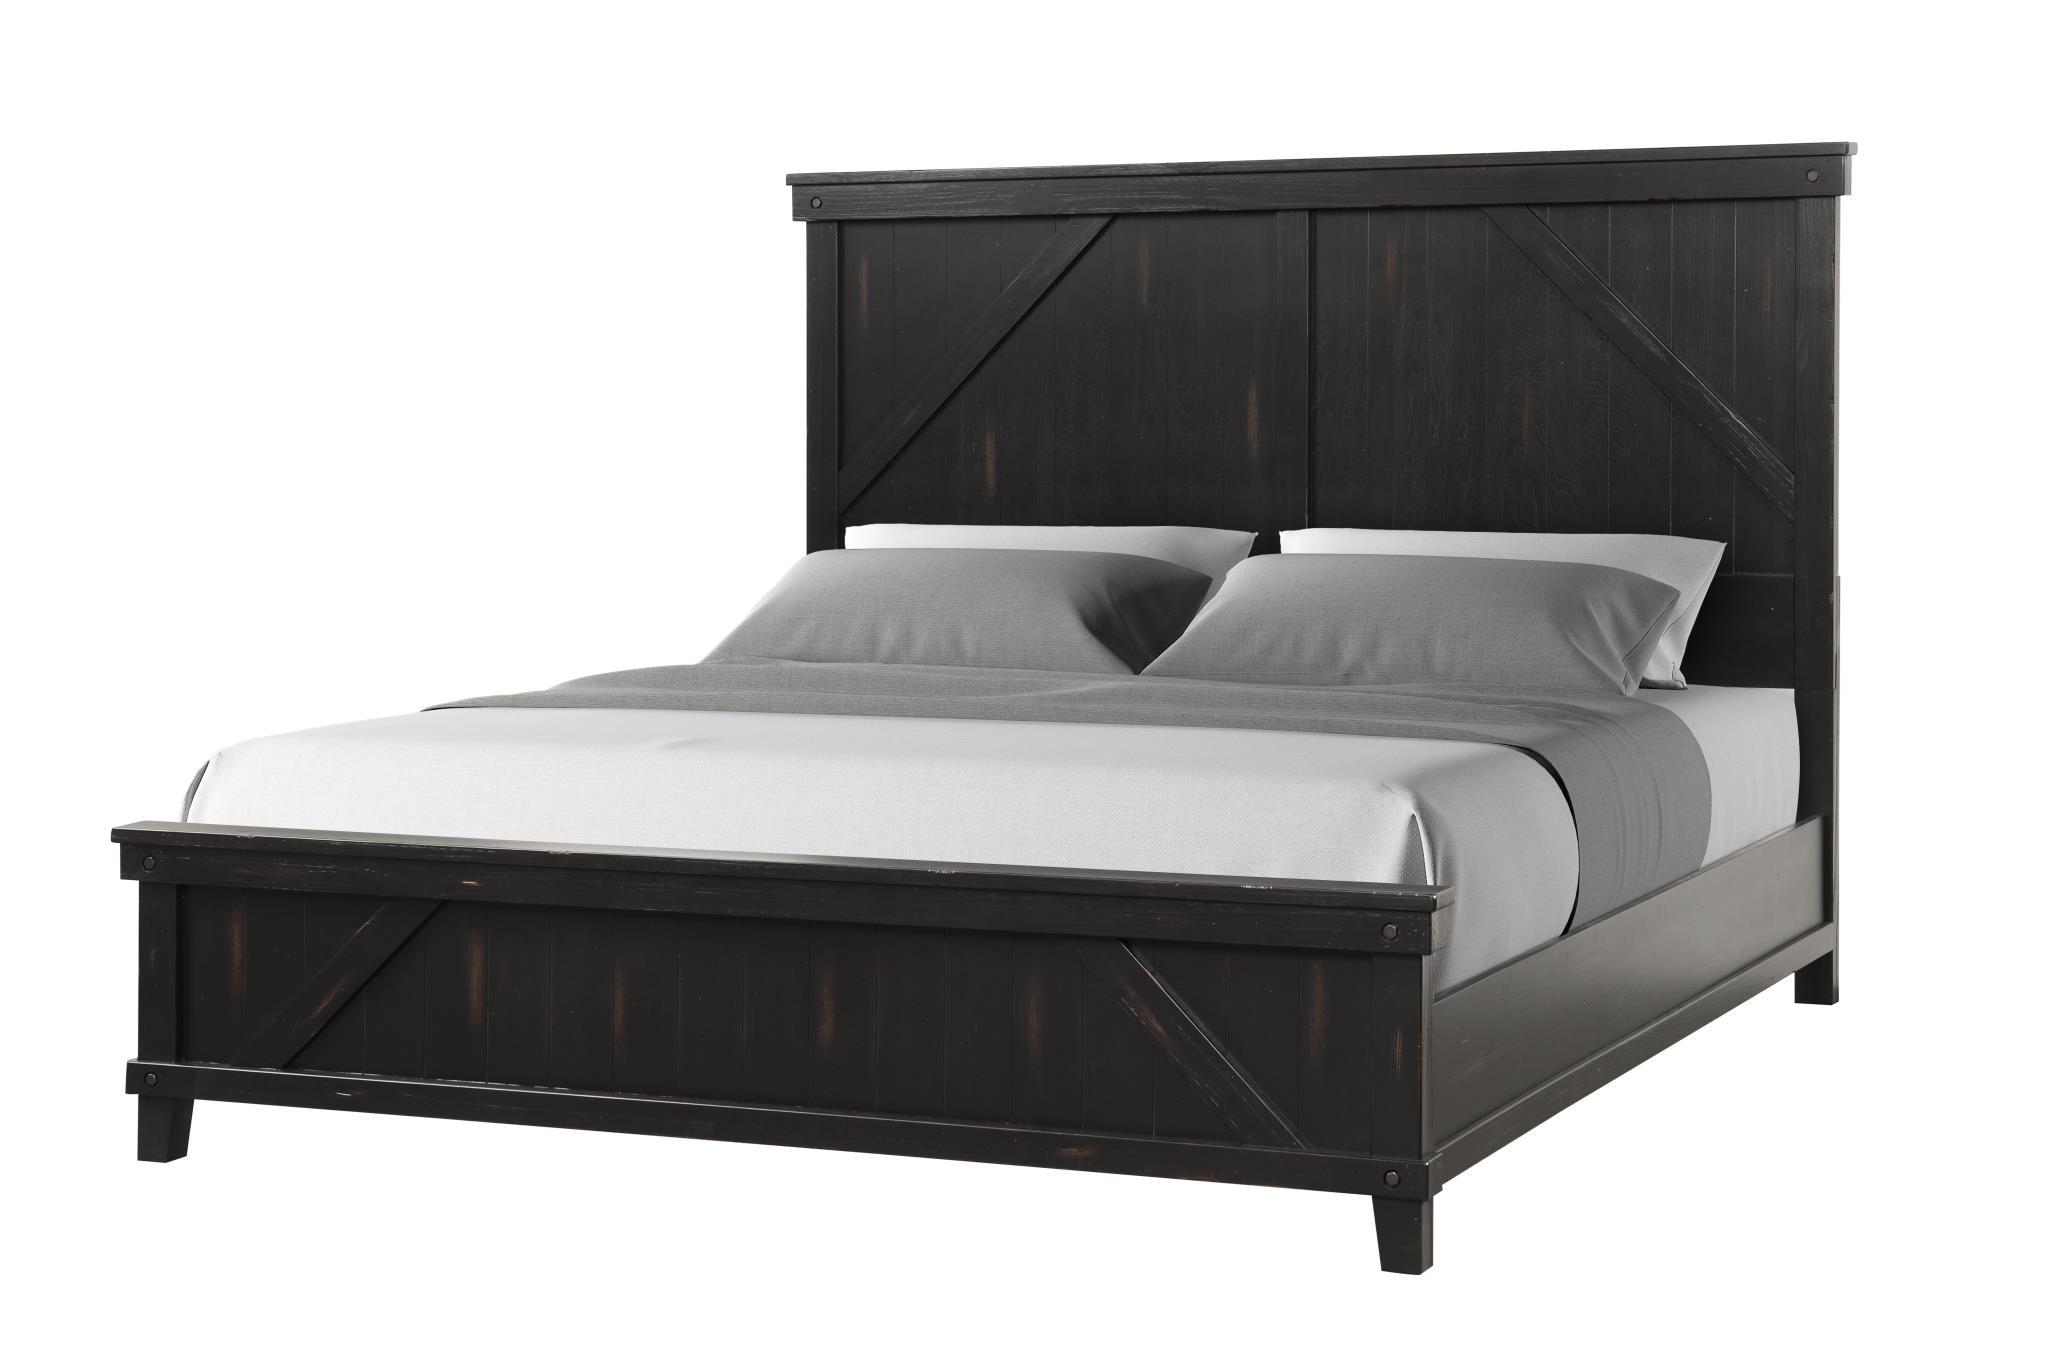 Classic, Transitional Bedroom Set SPRUCE CREEK 1708-110-Set-3 1708-110-2N-3PC in Black 